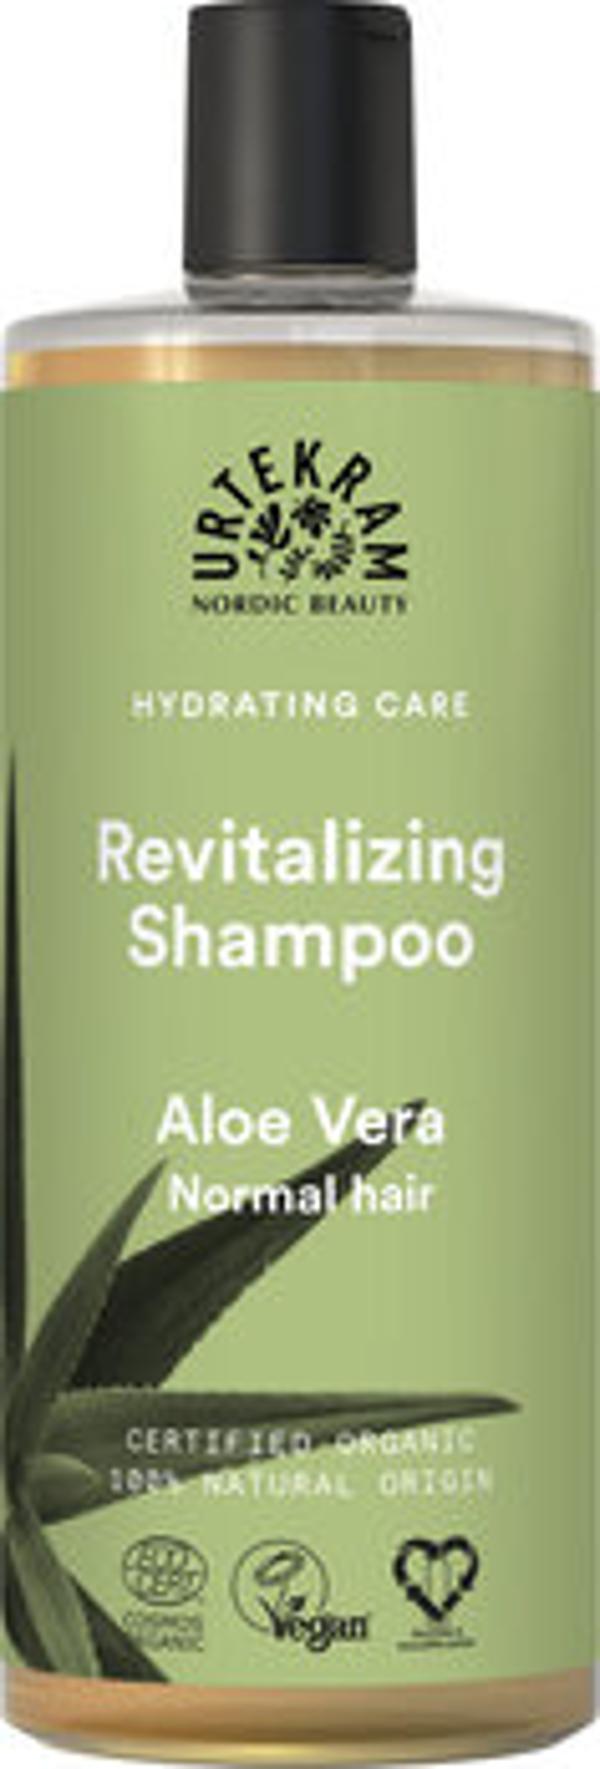 Produktfoto zu Aloe Vera Shampoo normal Haar 500ml